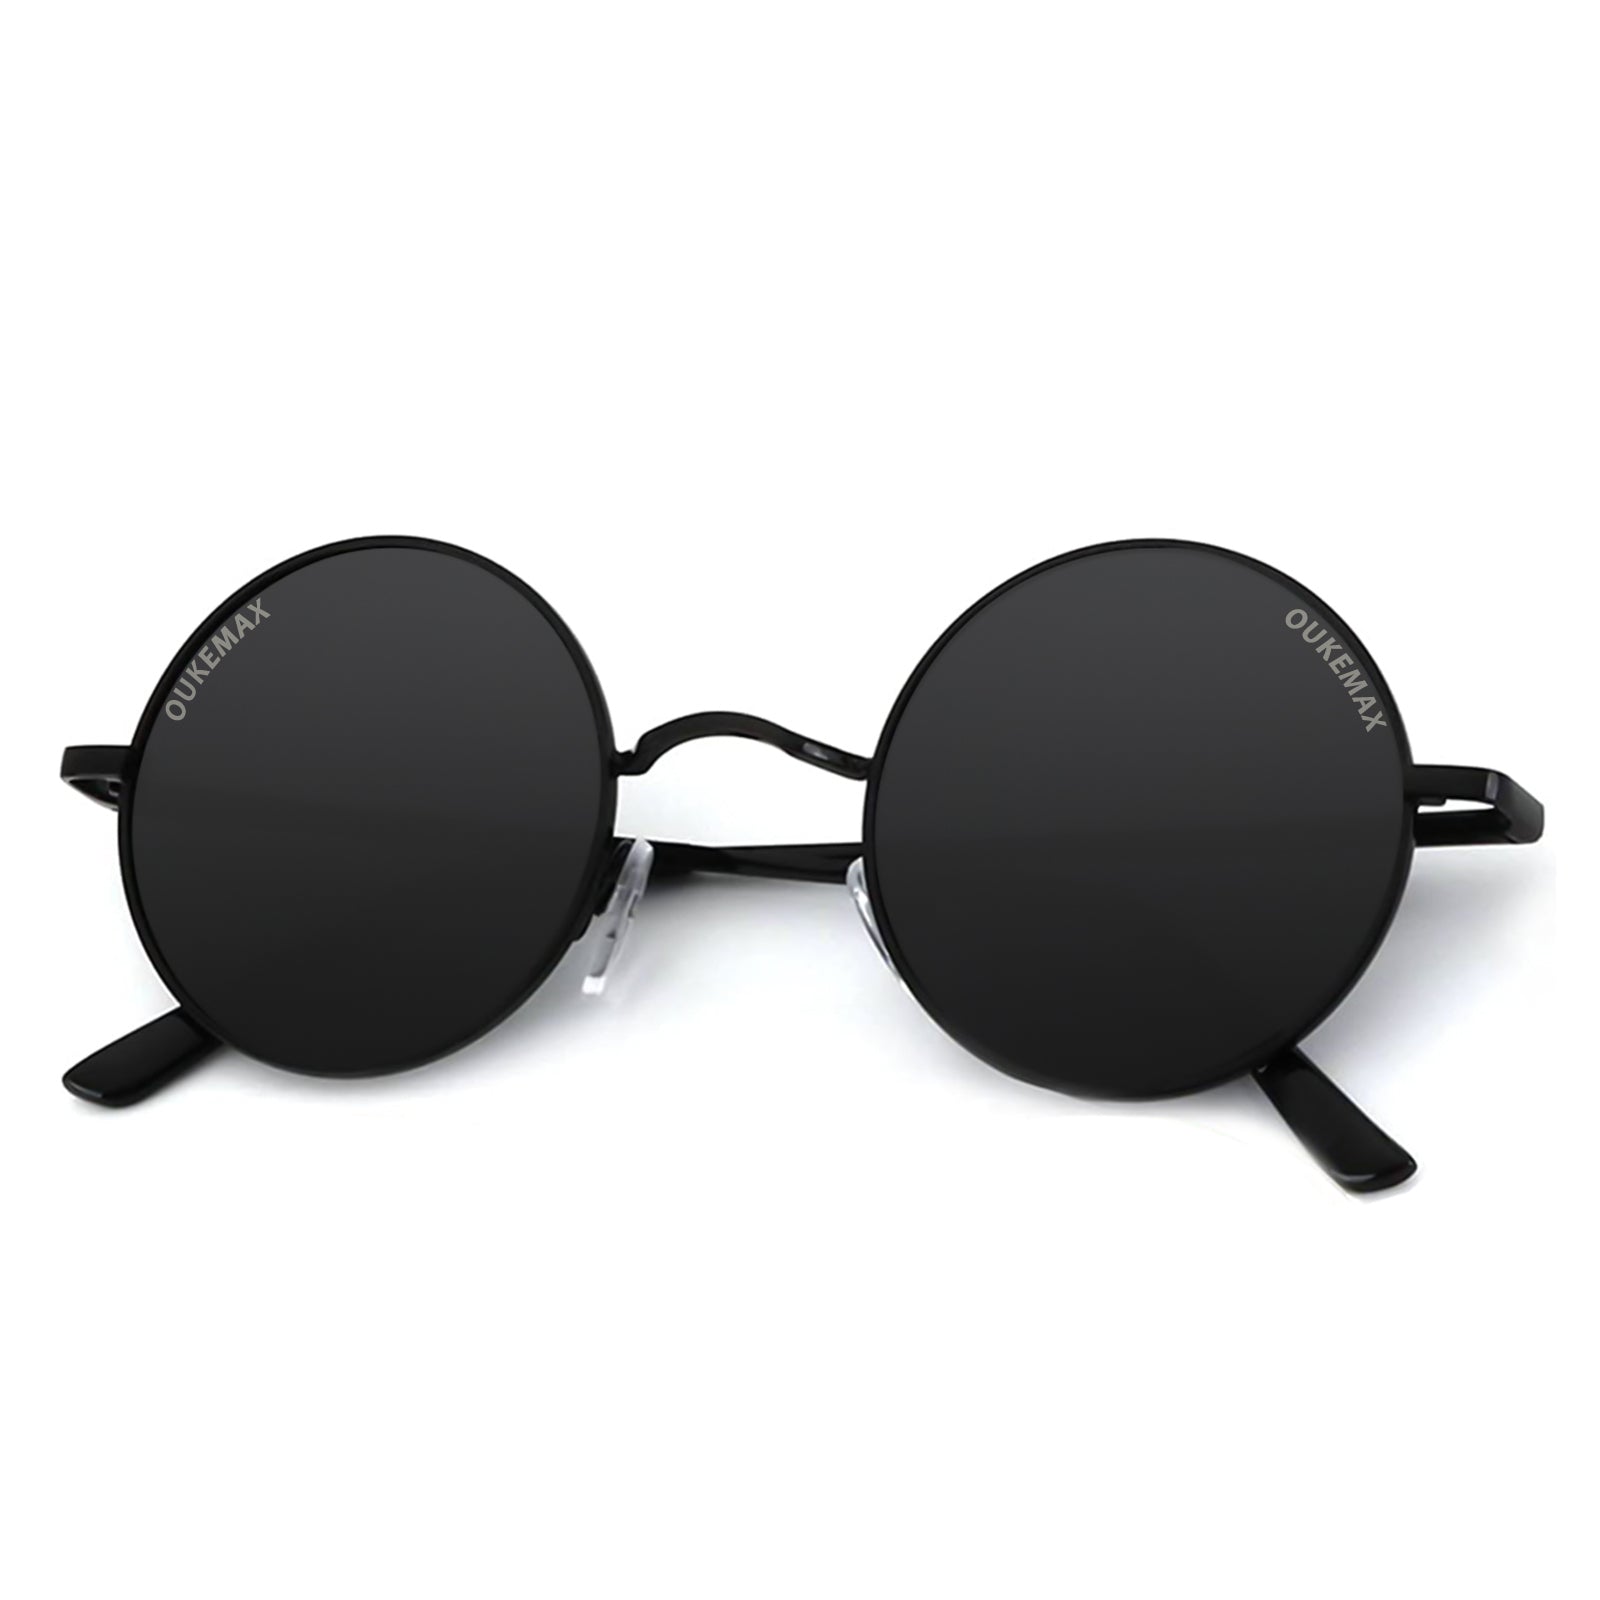 OUKEMAX Round Polarized Sunglasses S36-1